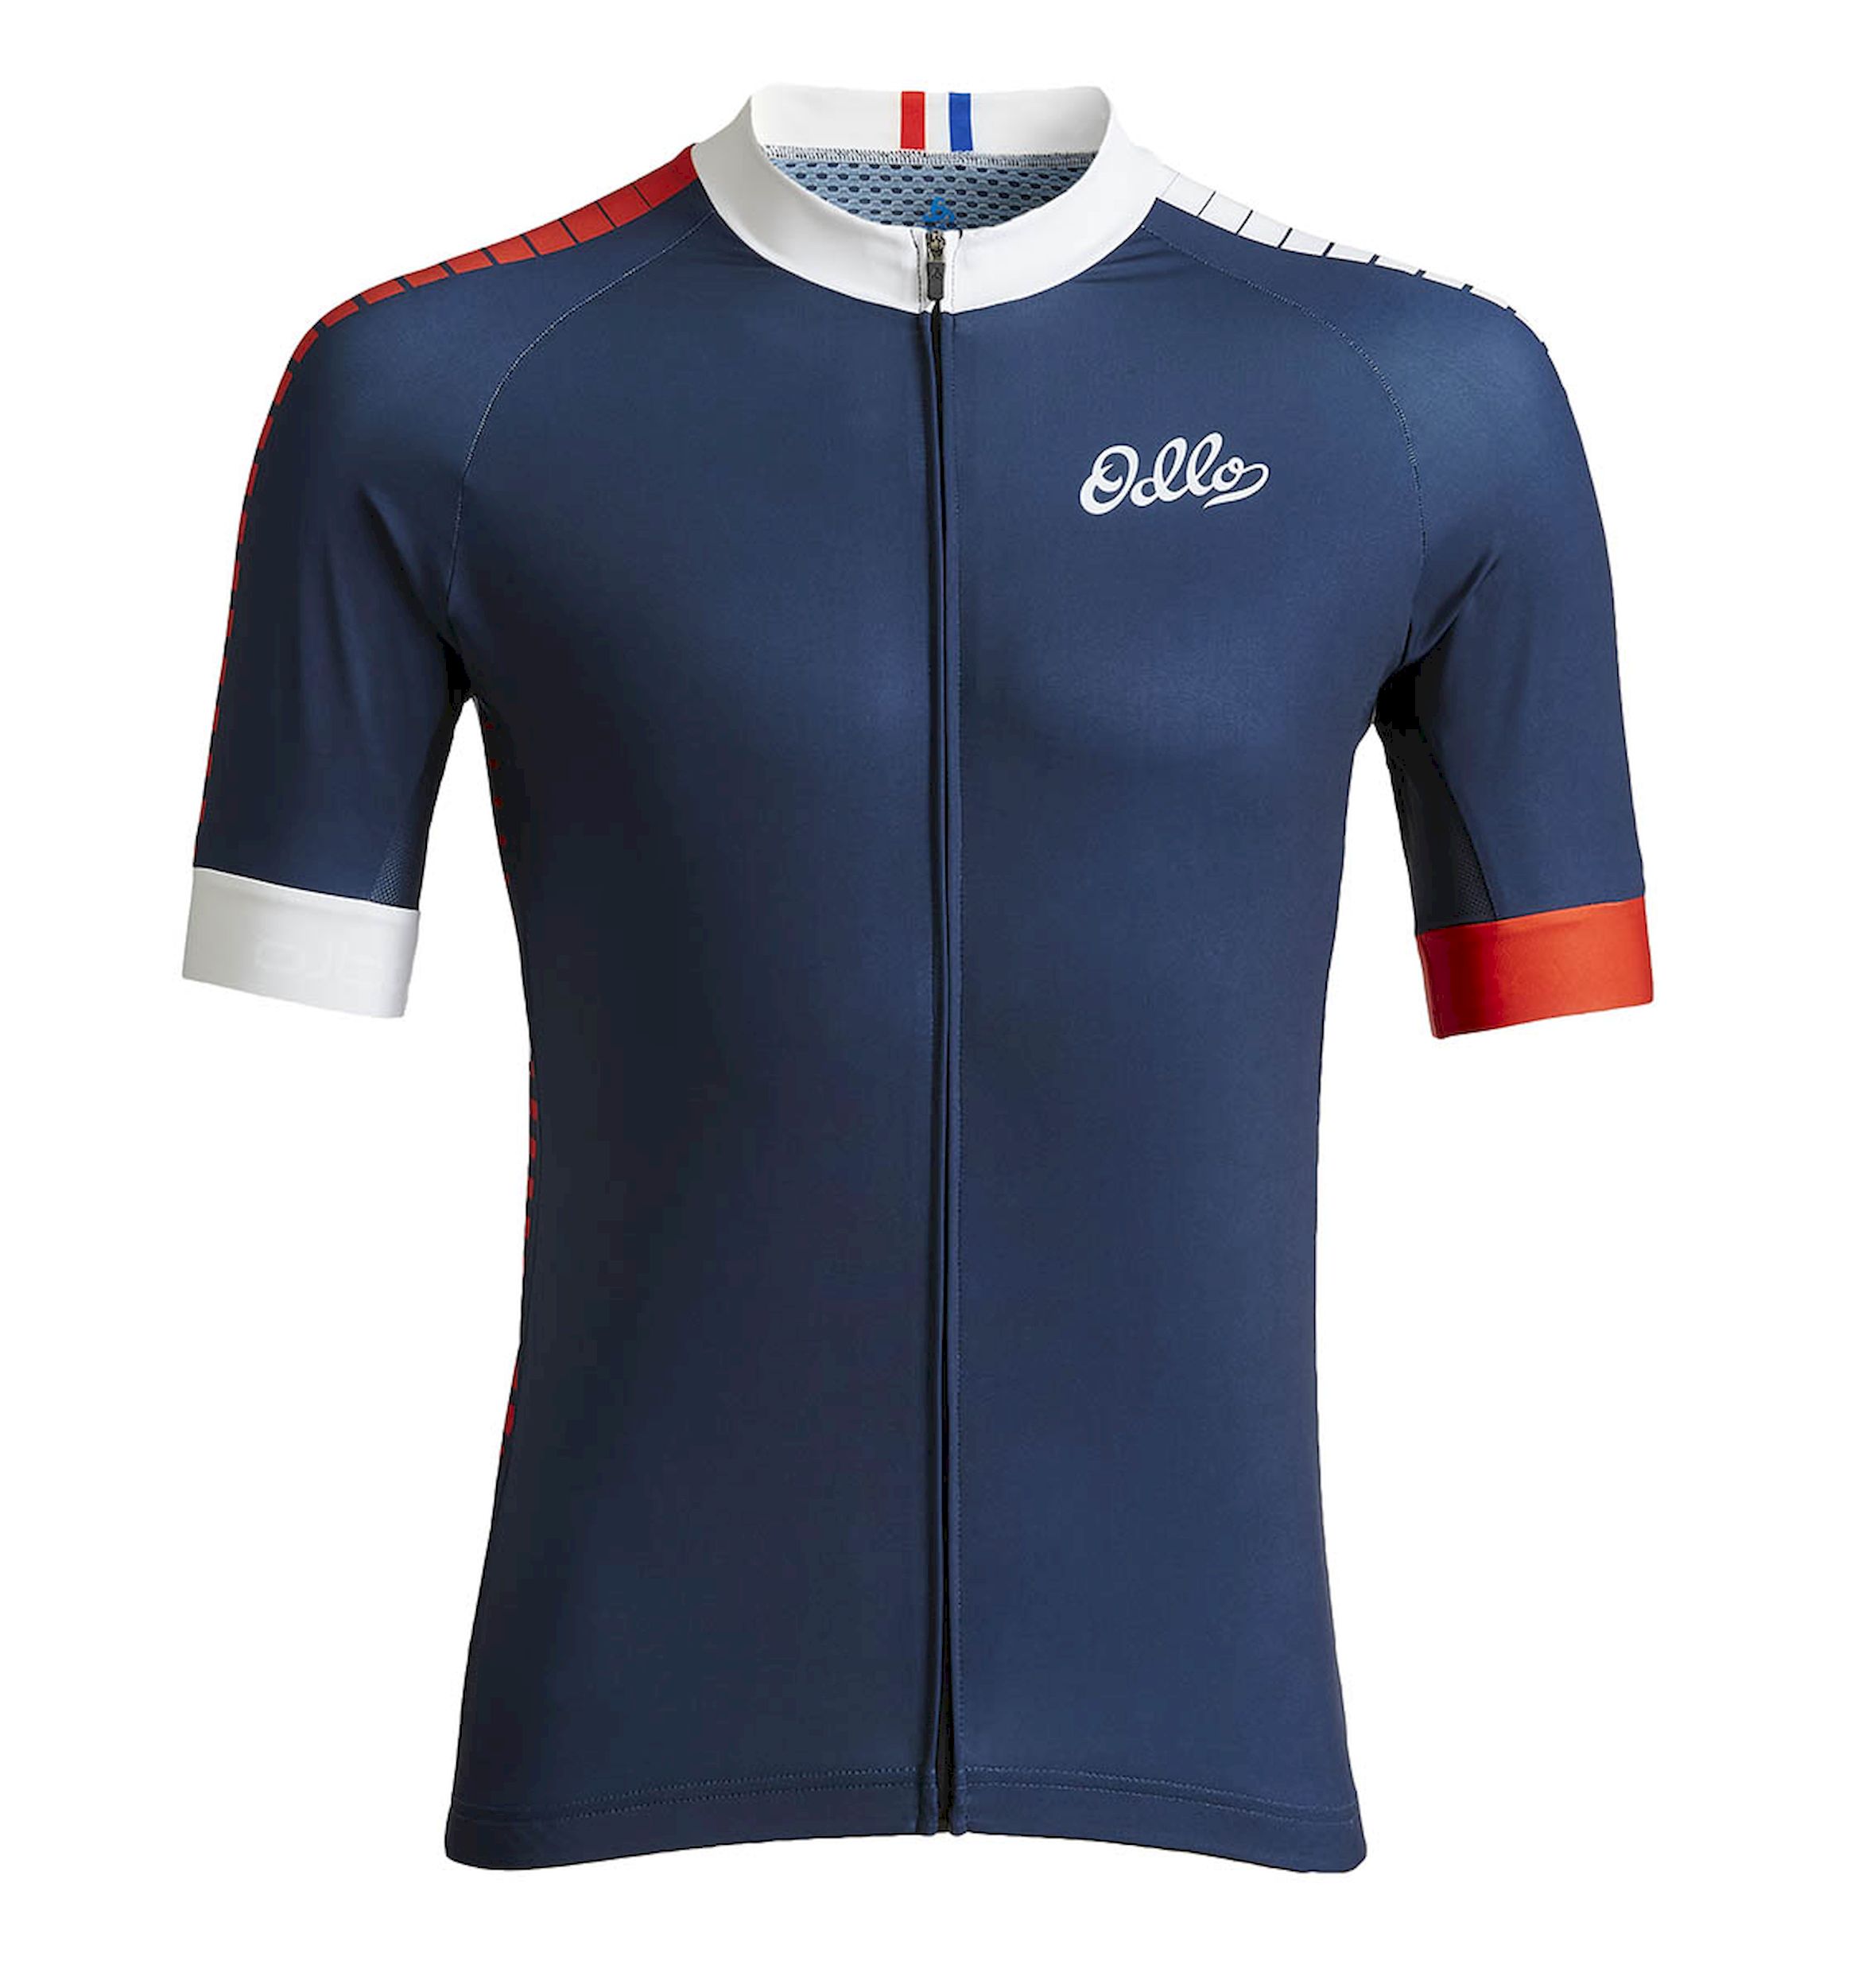 Odlo Performance - Short Sleeve Cycling jersey - Men's